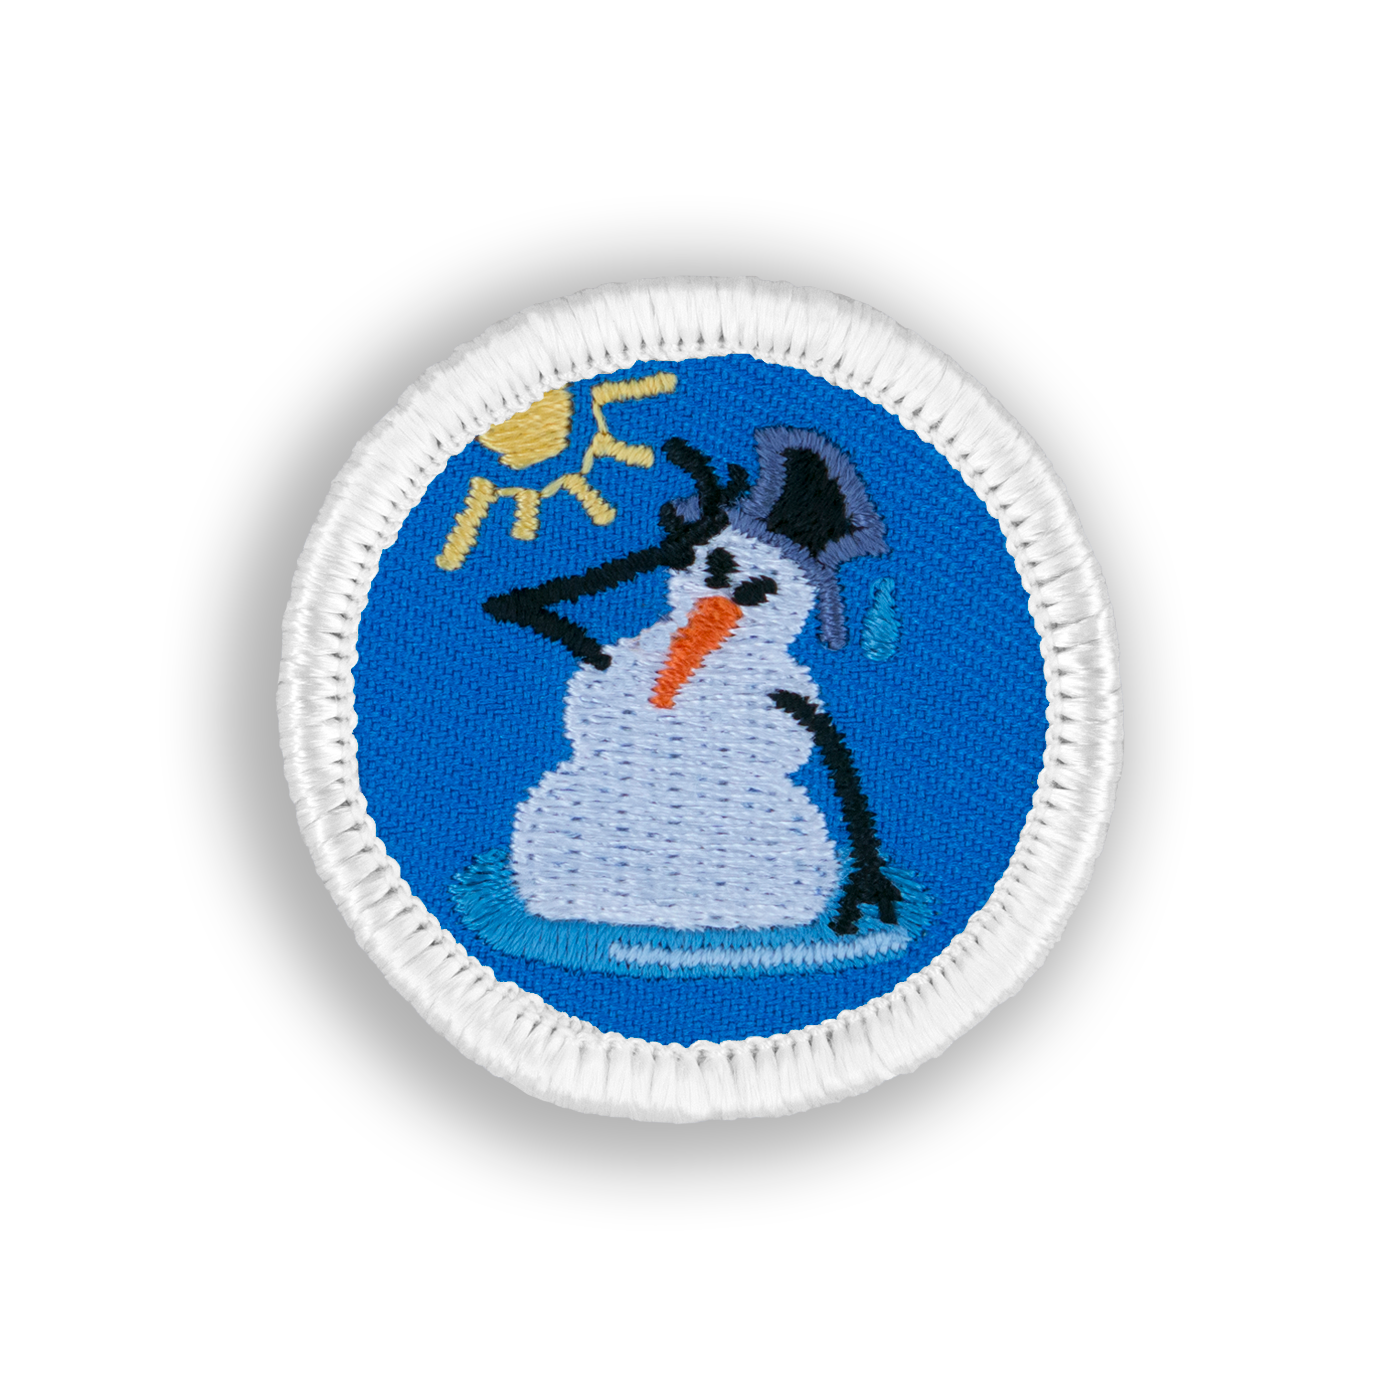 Melty the Snowman Patch | Demerit Wear - Fake Merit Badges